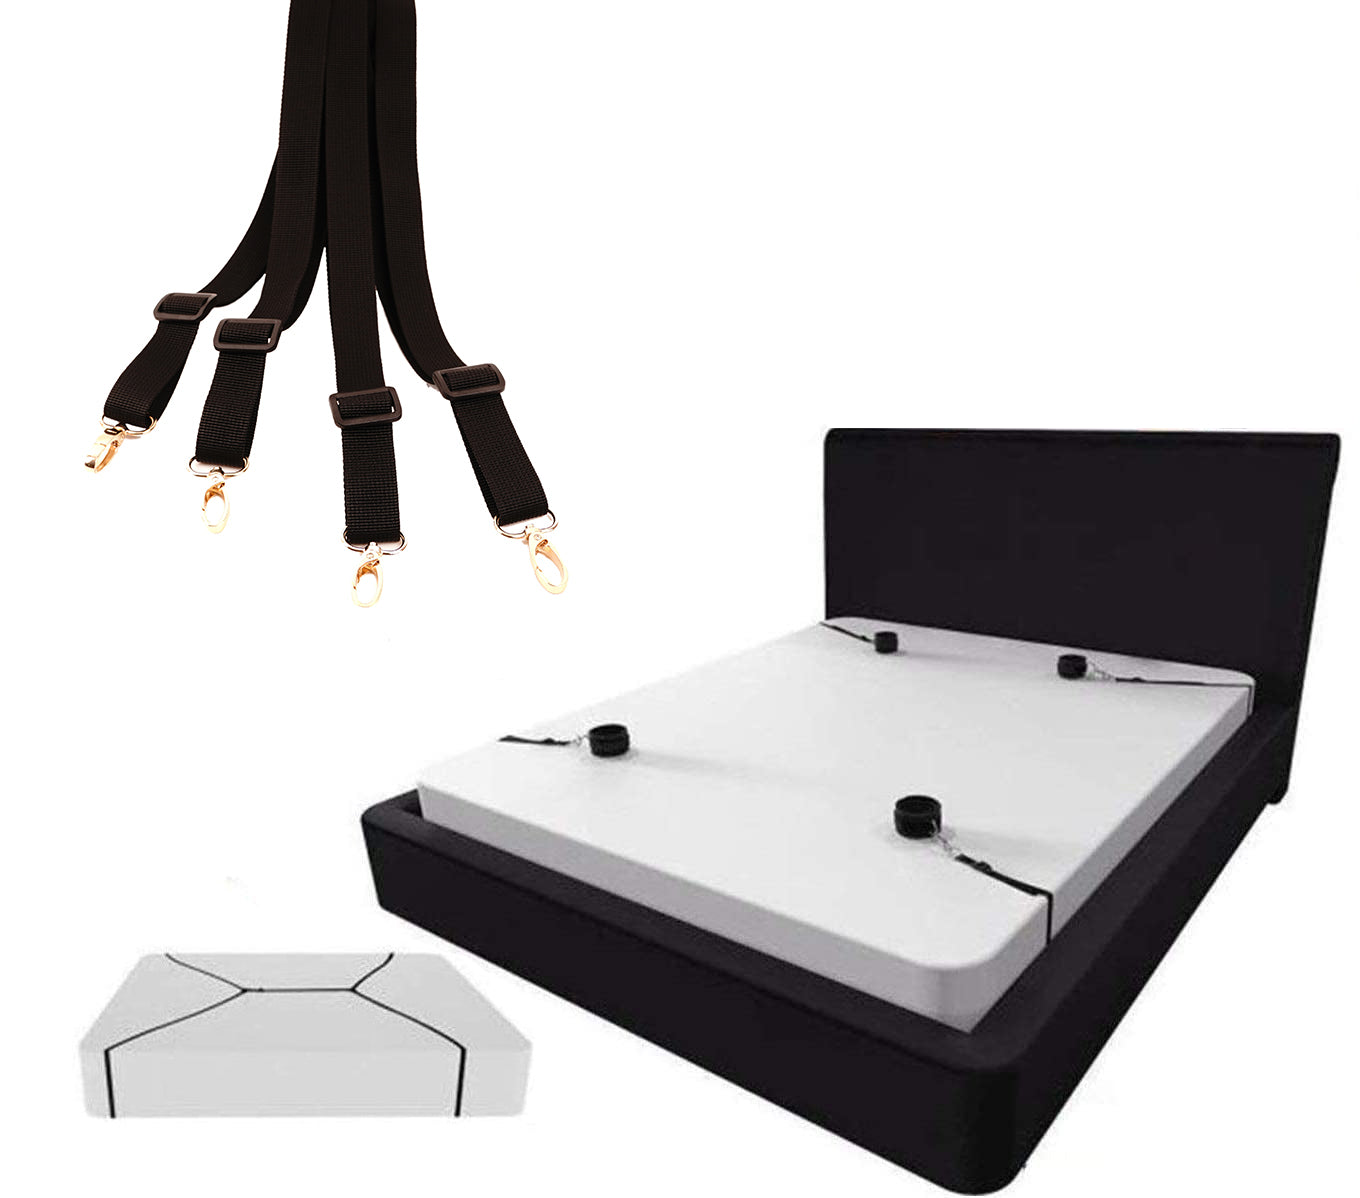 All inclusive Leather Bondage Set with Bed Restraints. 10 colors